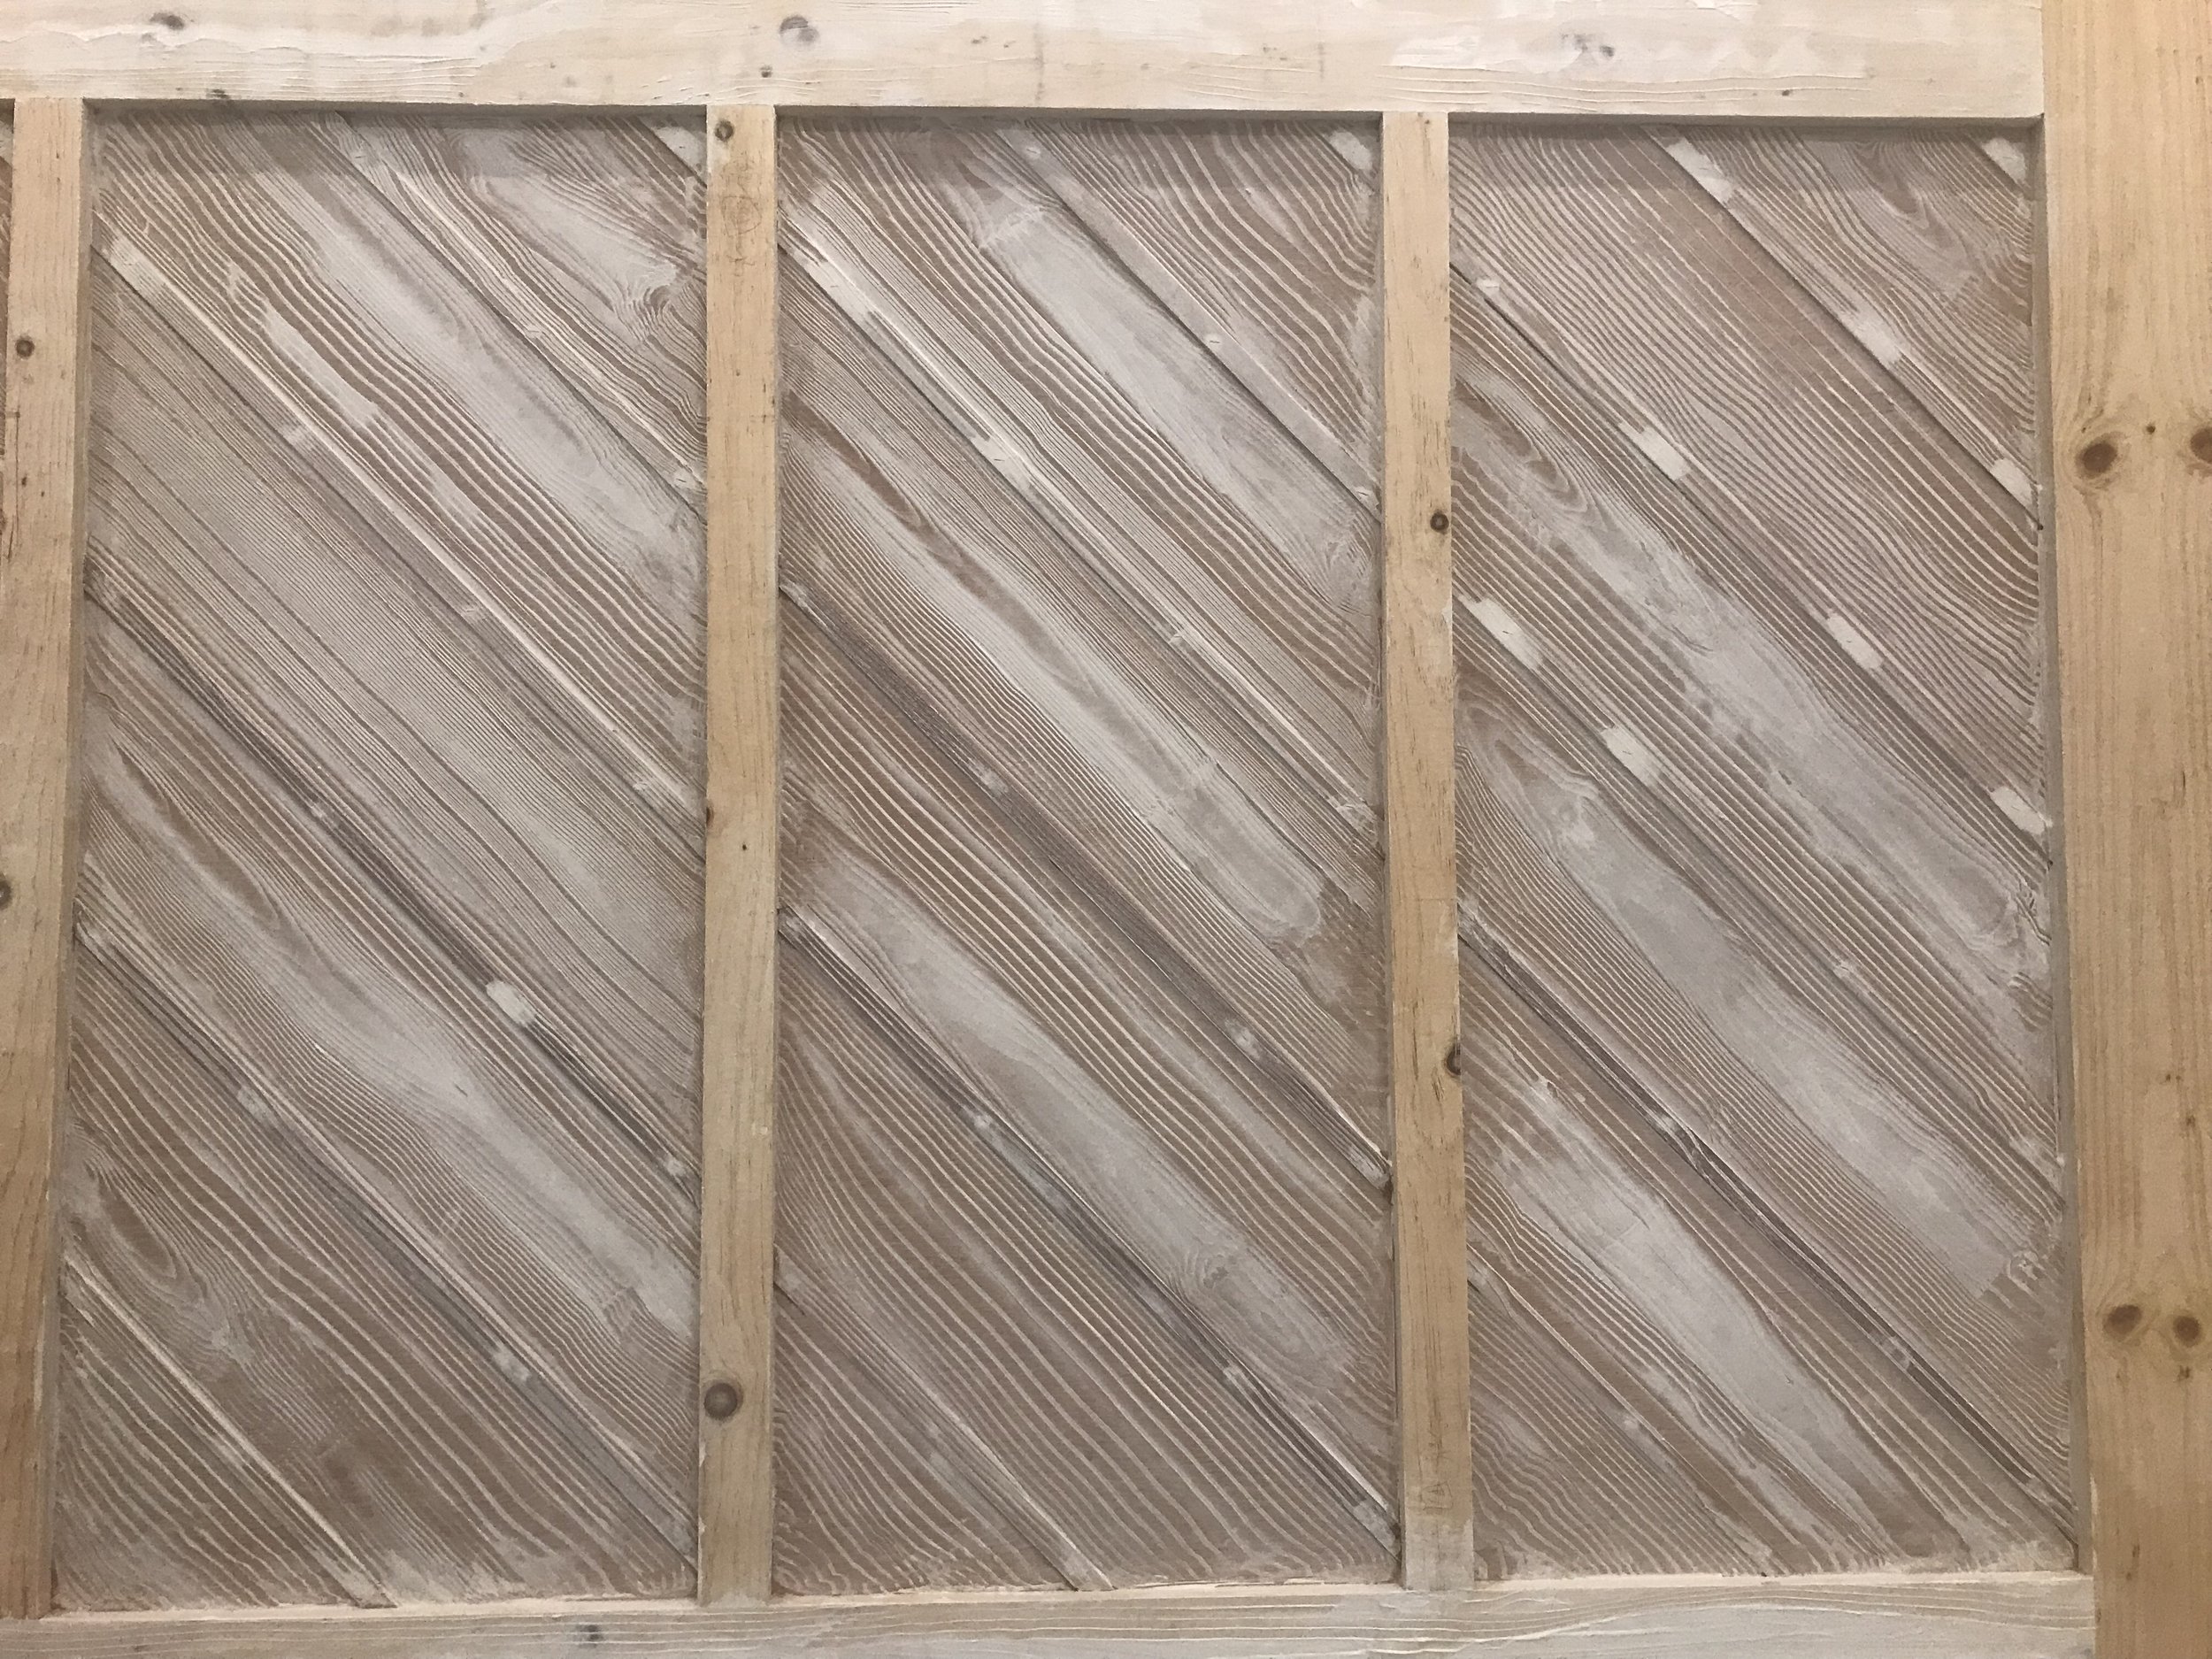  In progress: jaxsan texture for faux wood on soup kitchen sliding doors 